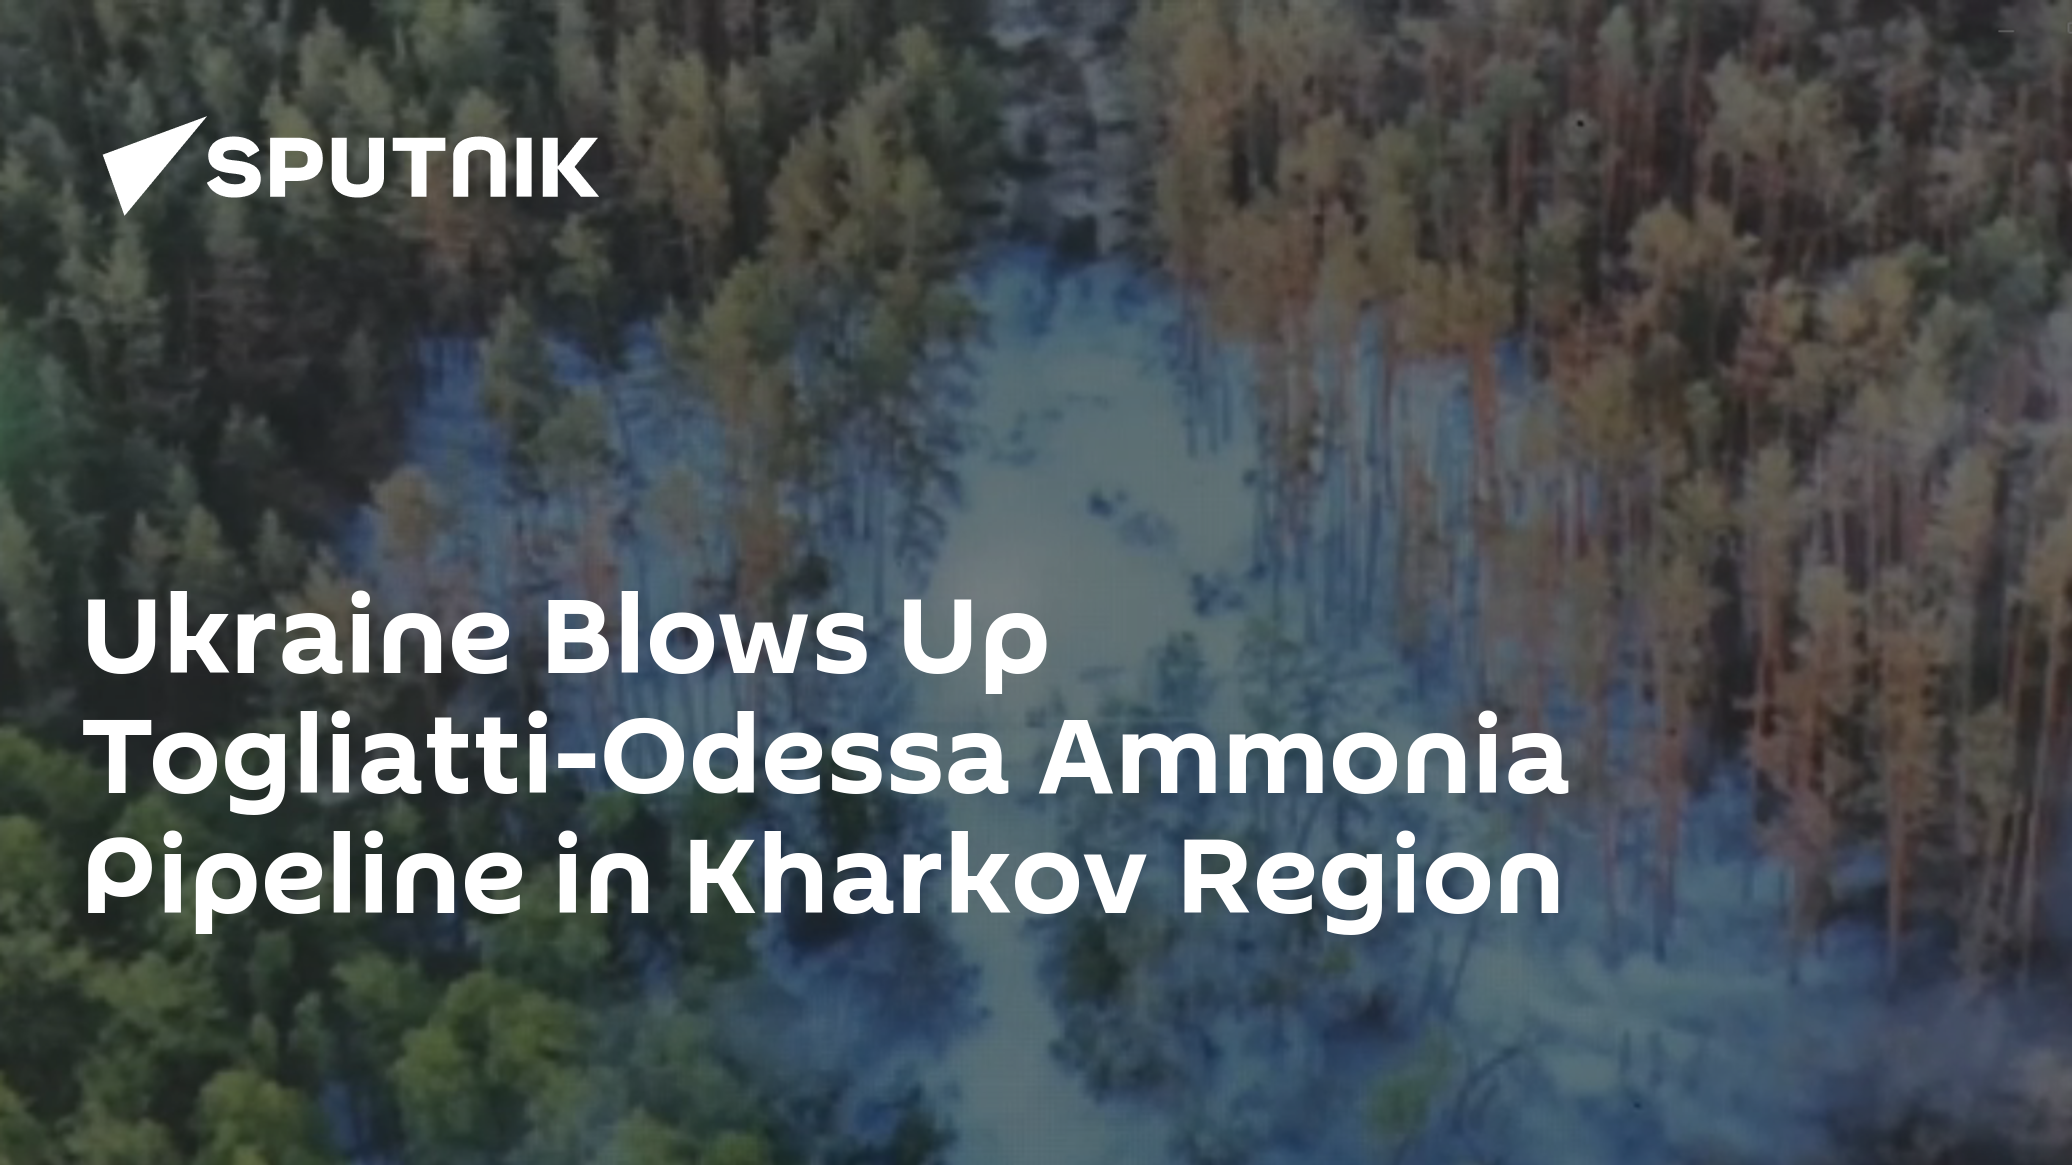 Ukraine Blows Up Togliatti-Odessa Ammonia Pipeline in Kharkov Region – Moscow